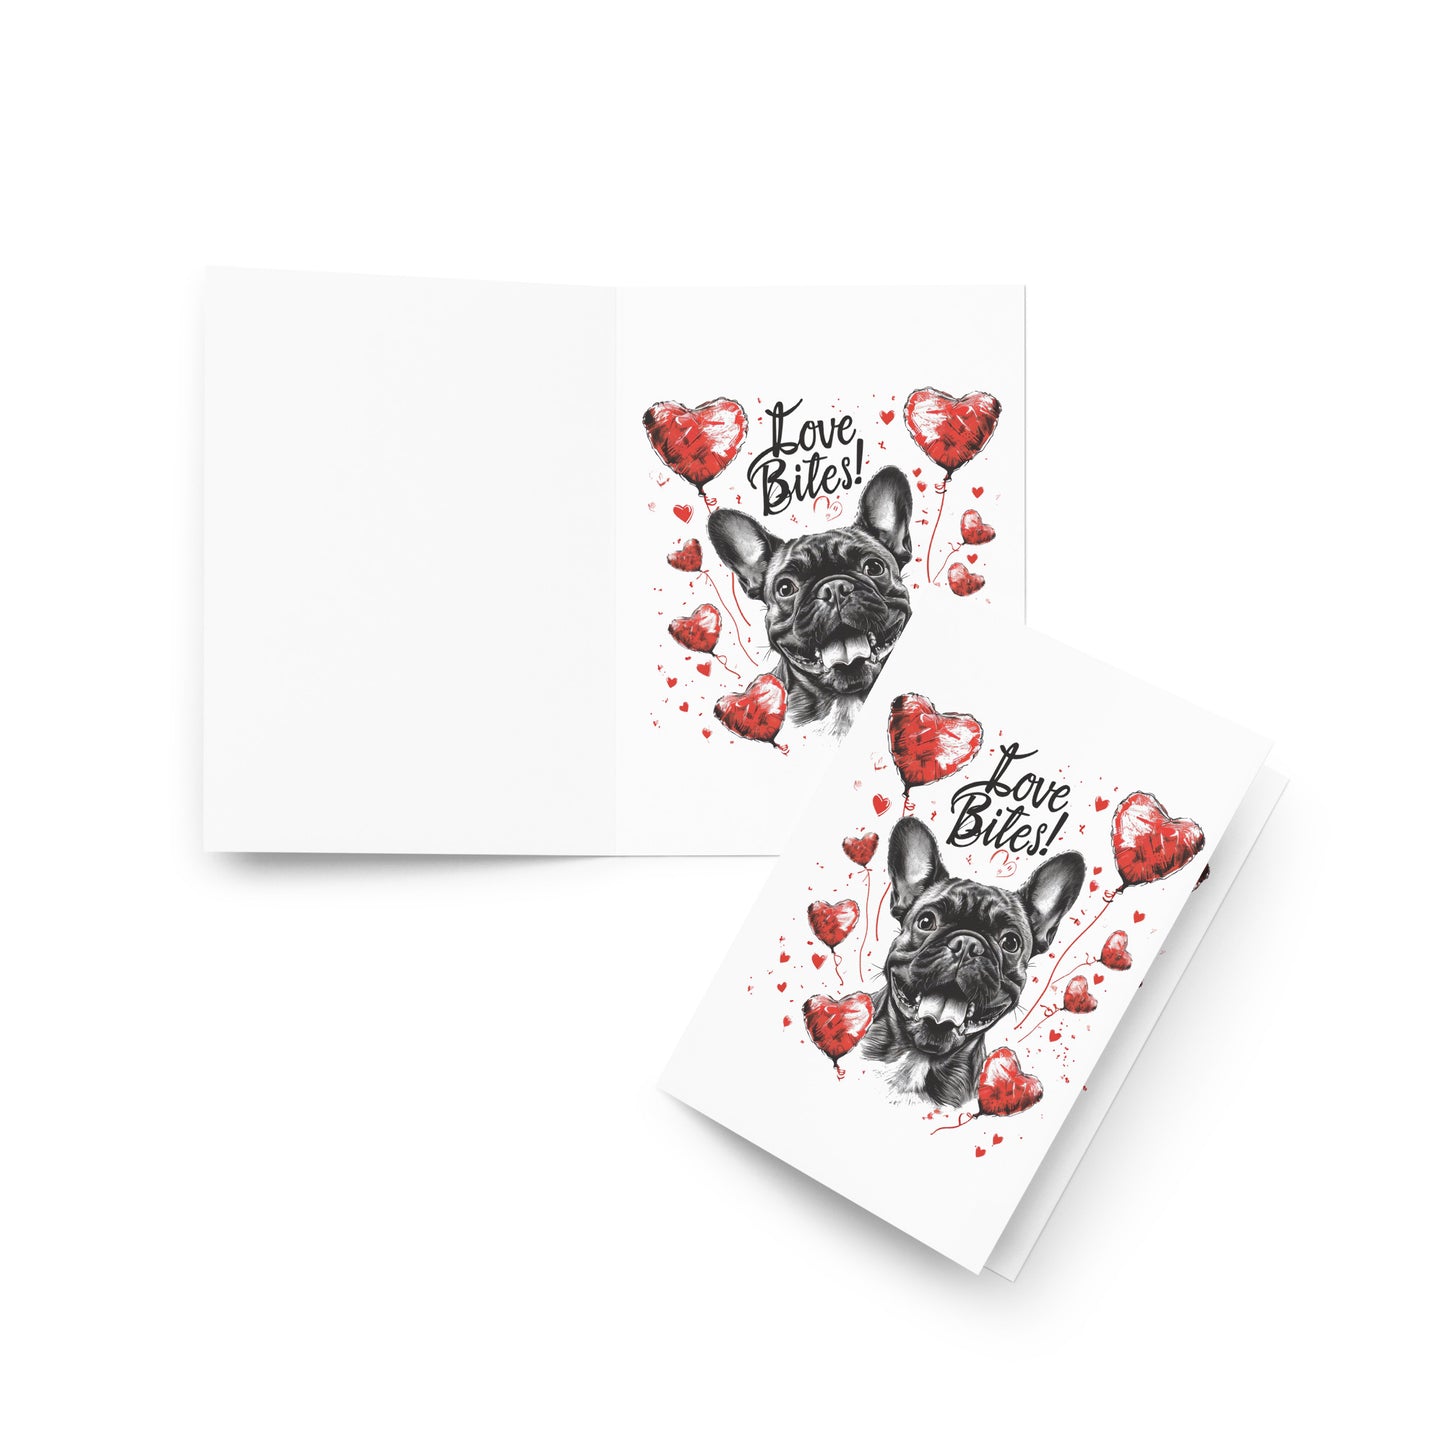 "Love Bites!" Greeting card